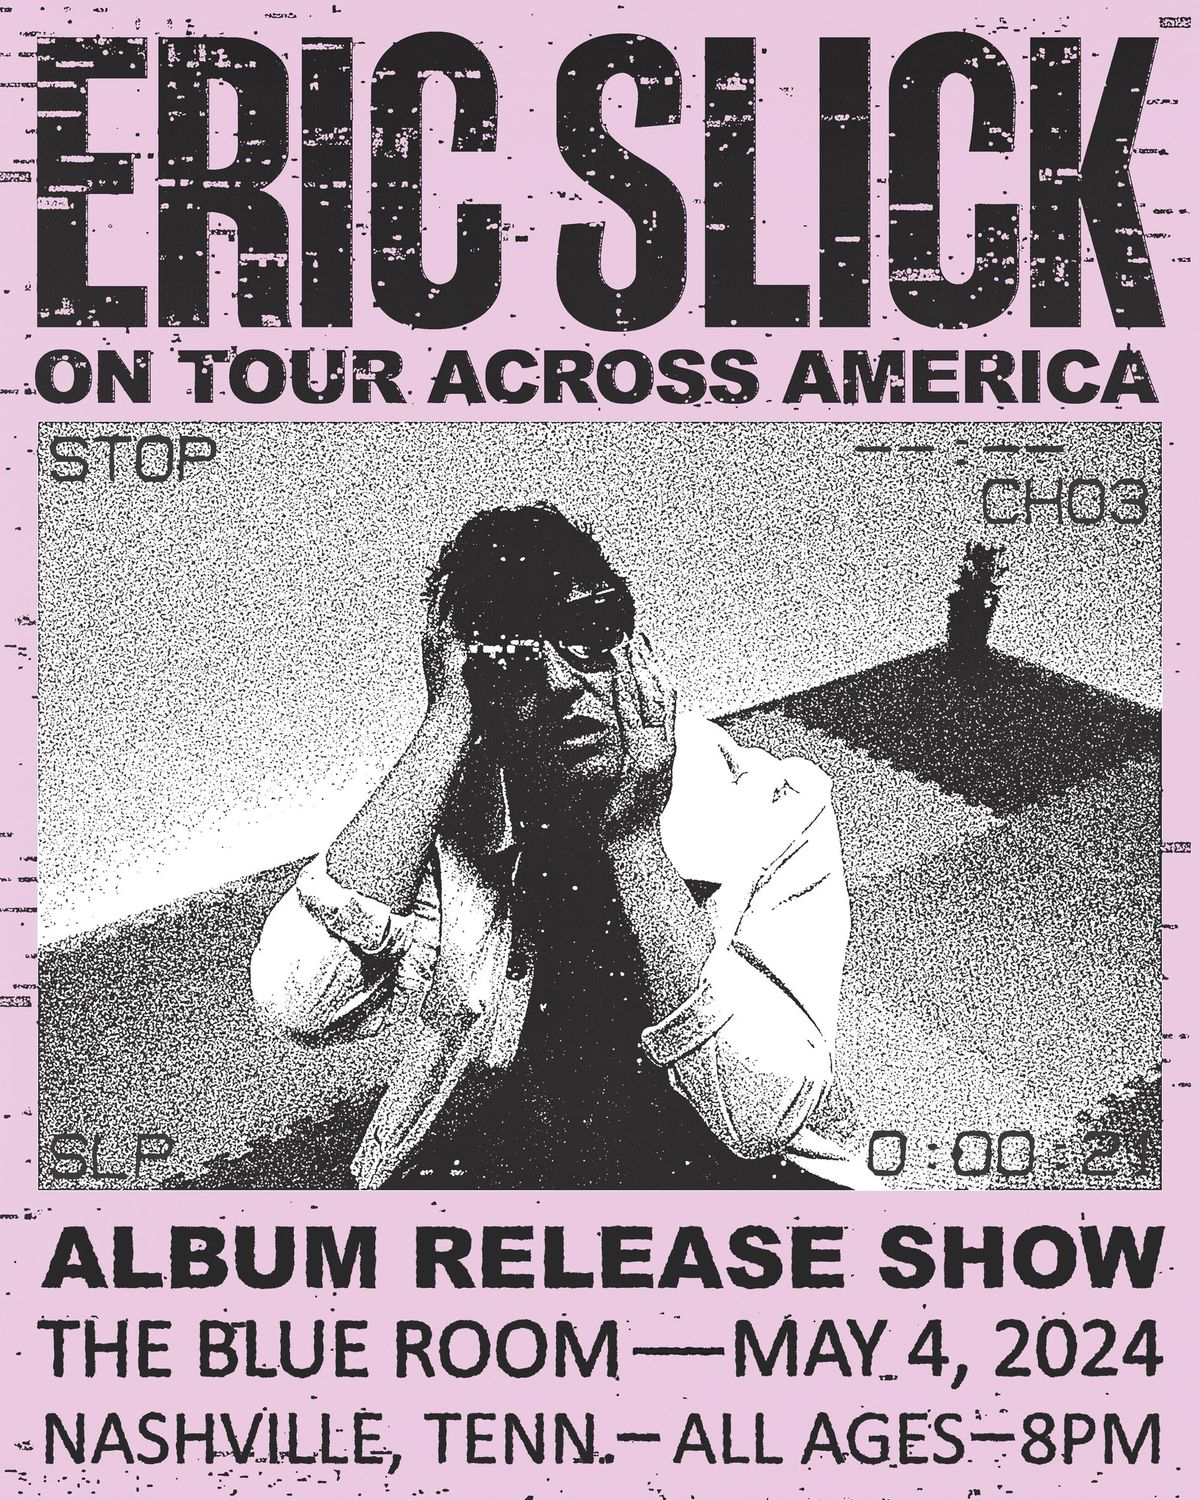 Eric Slick Album Release Show at The Blue Room